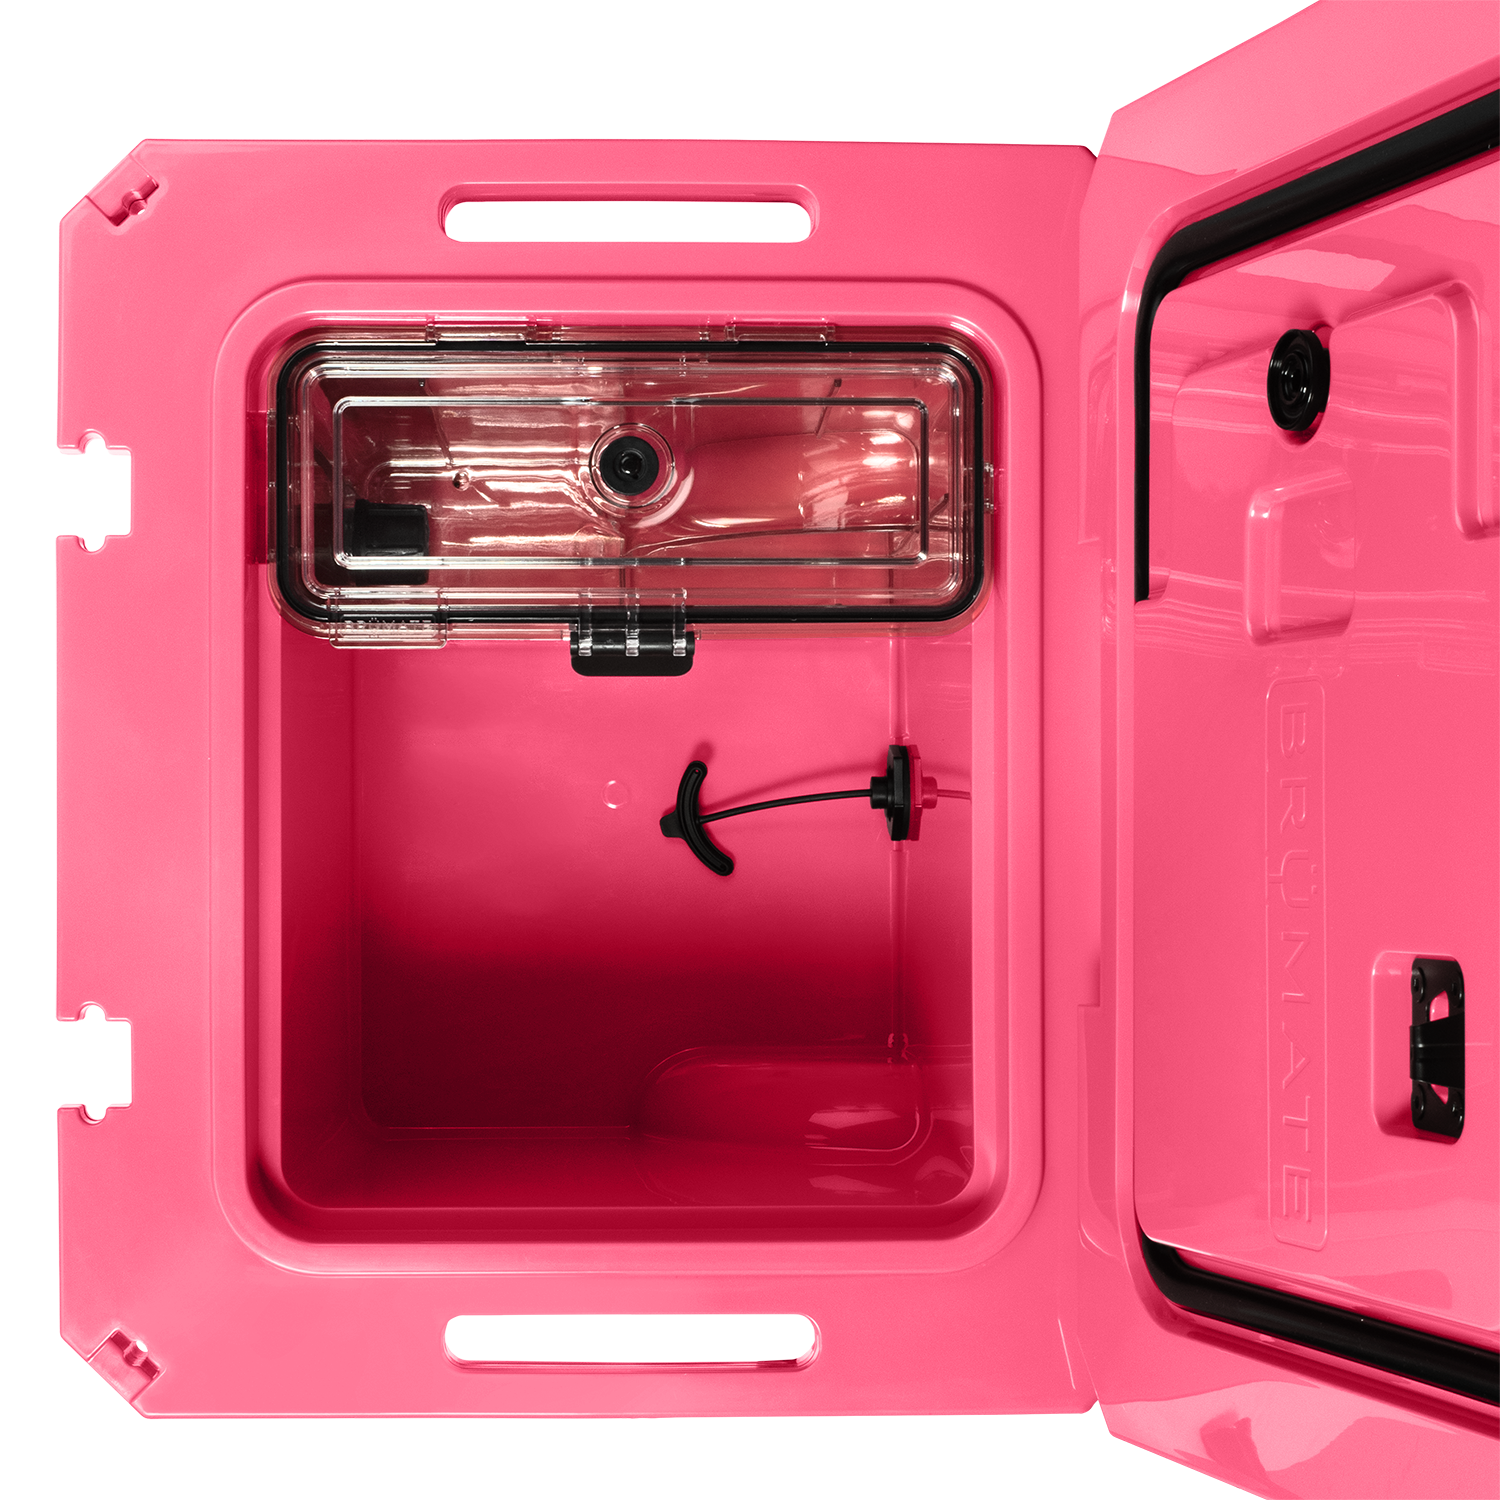 BrüTank 35-Quart Rolling Cooler | Neon Pink